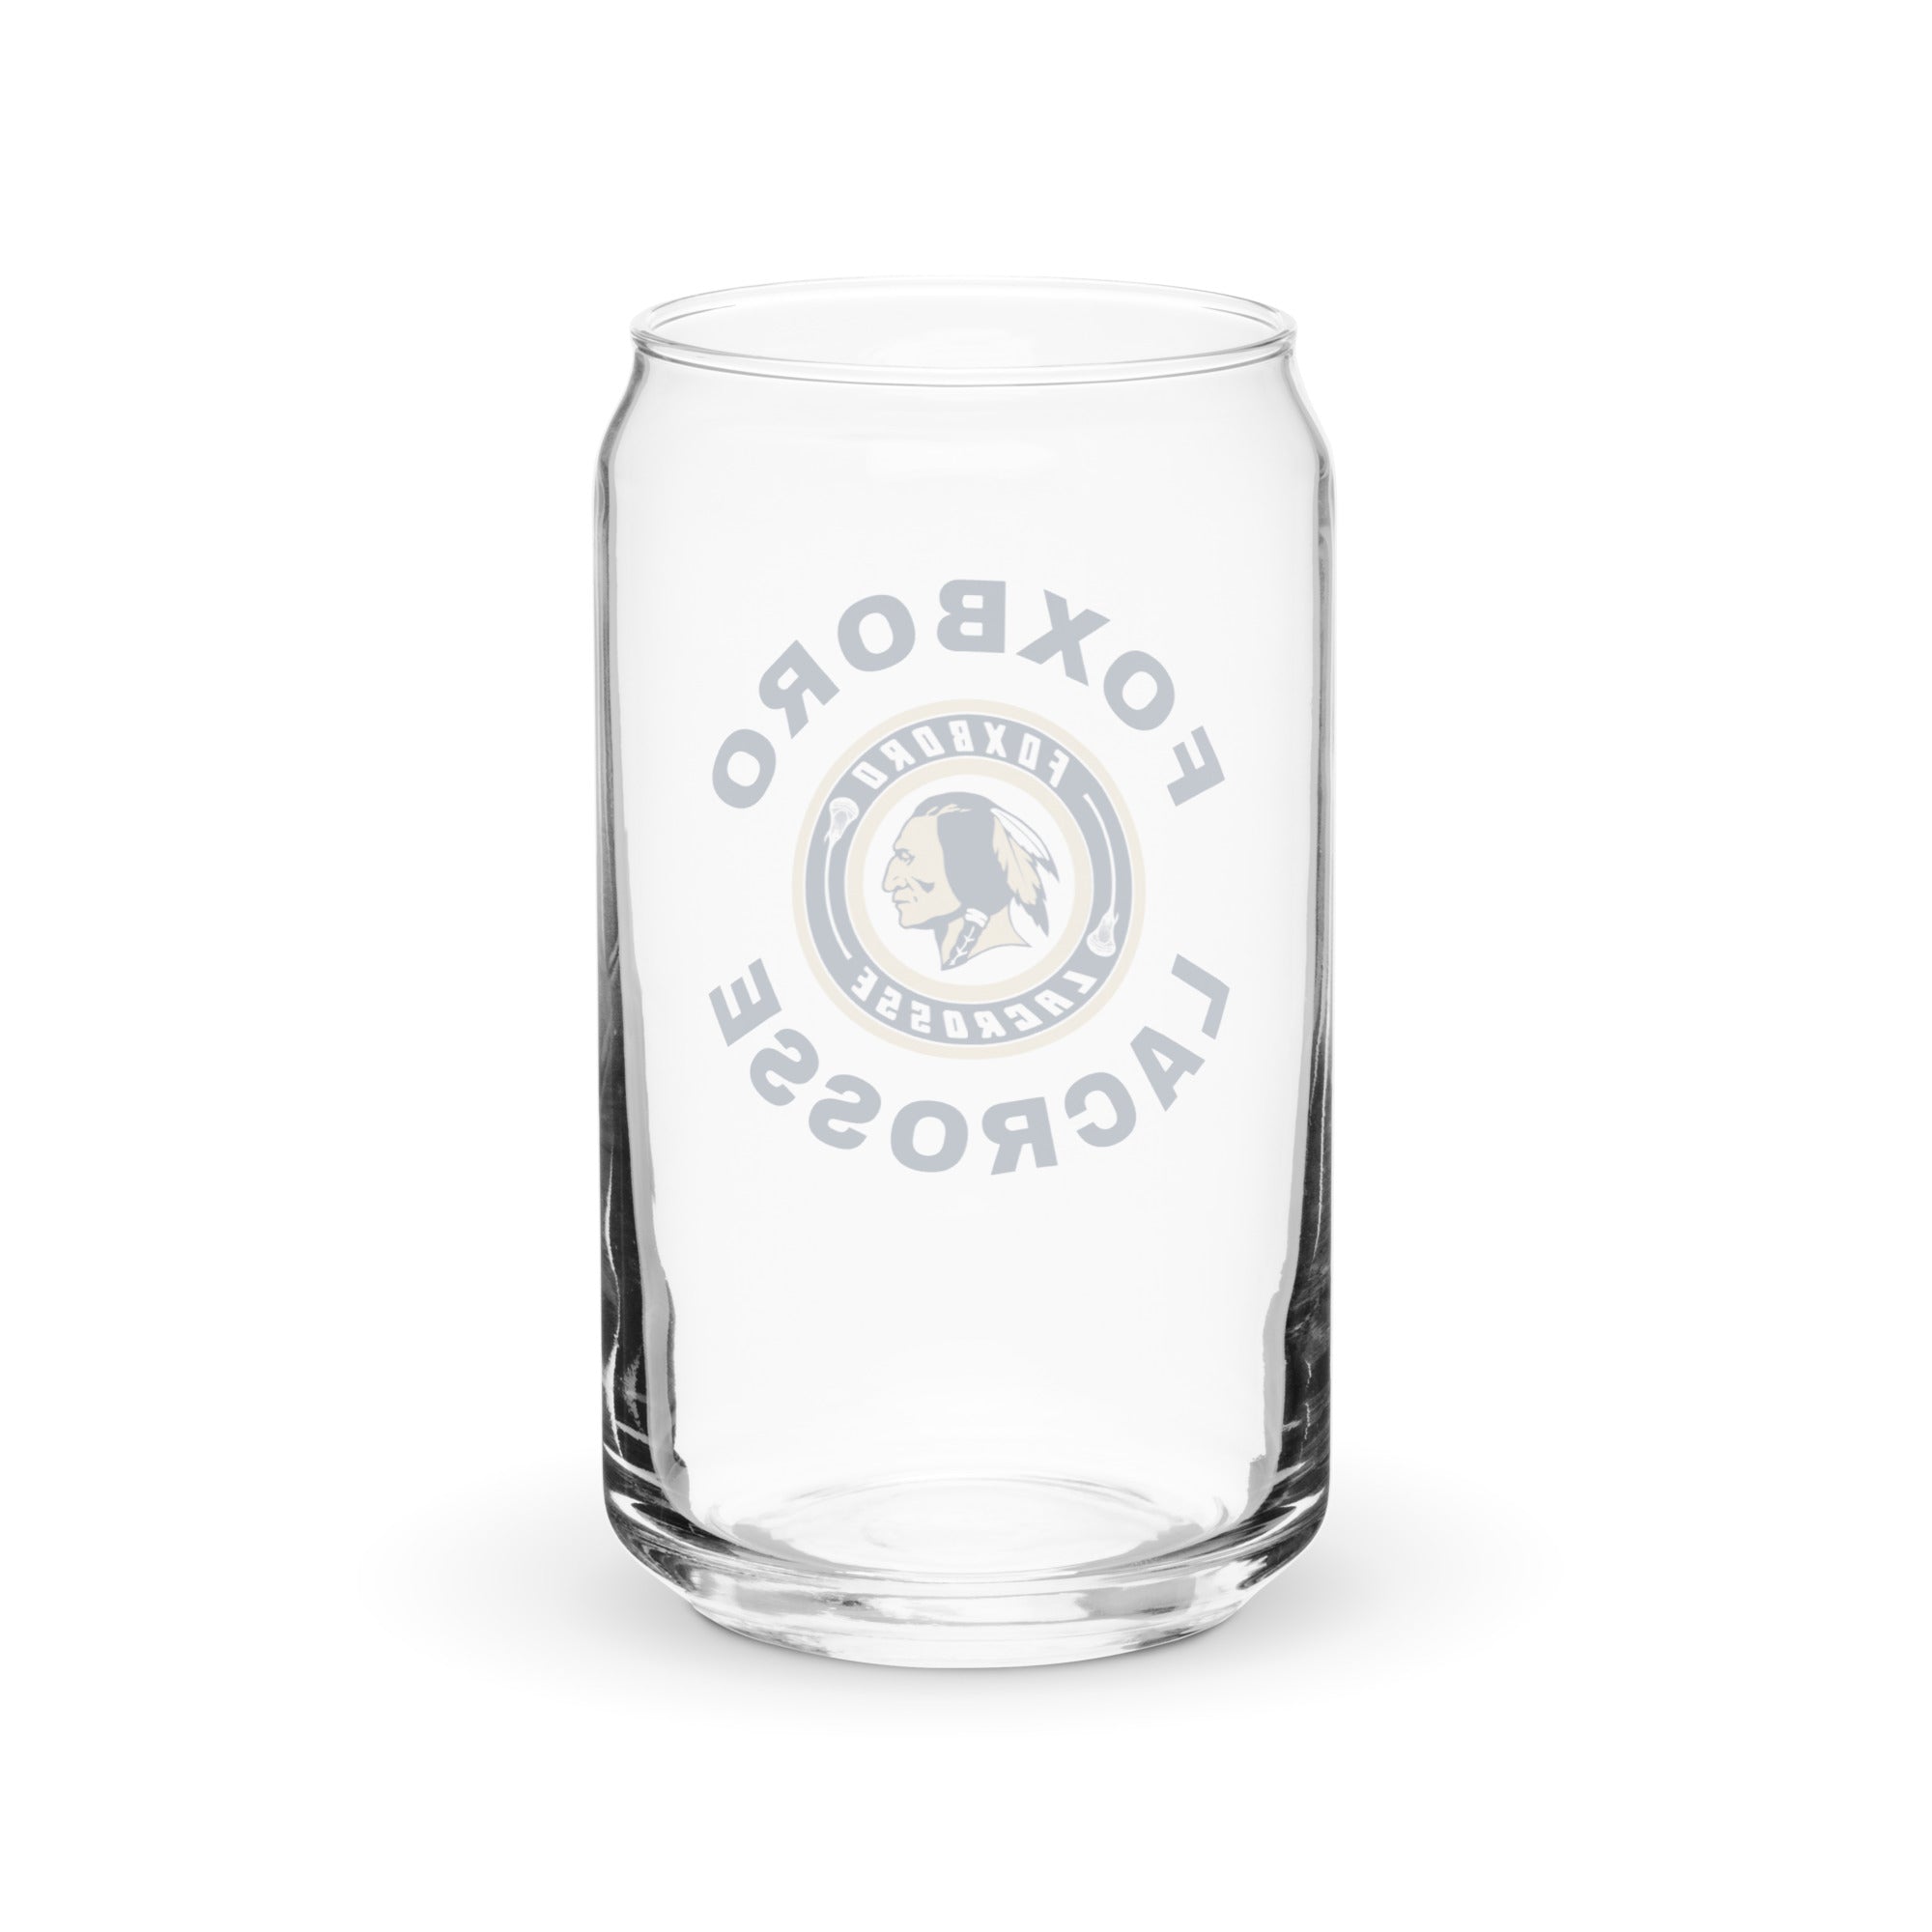 Foxboro Can-shaped glass